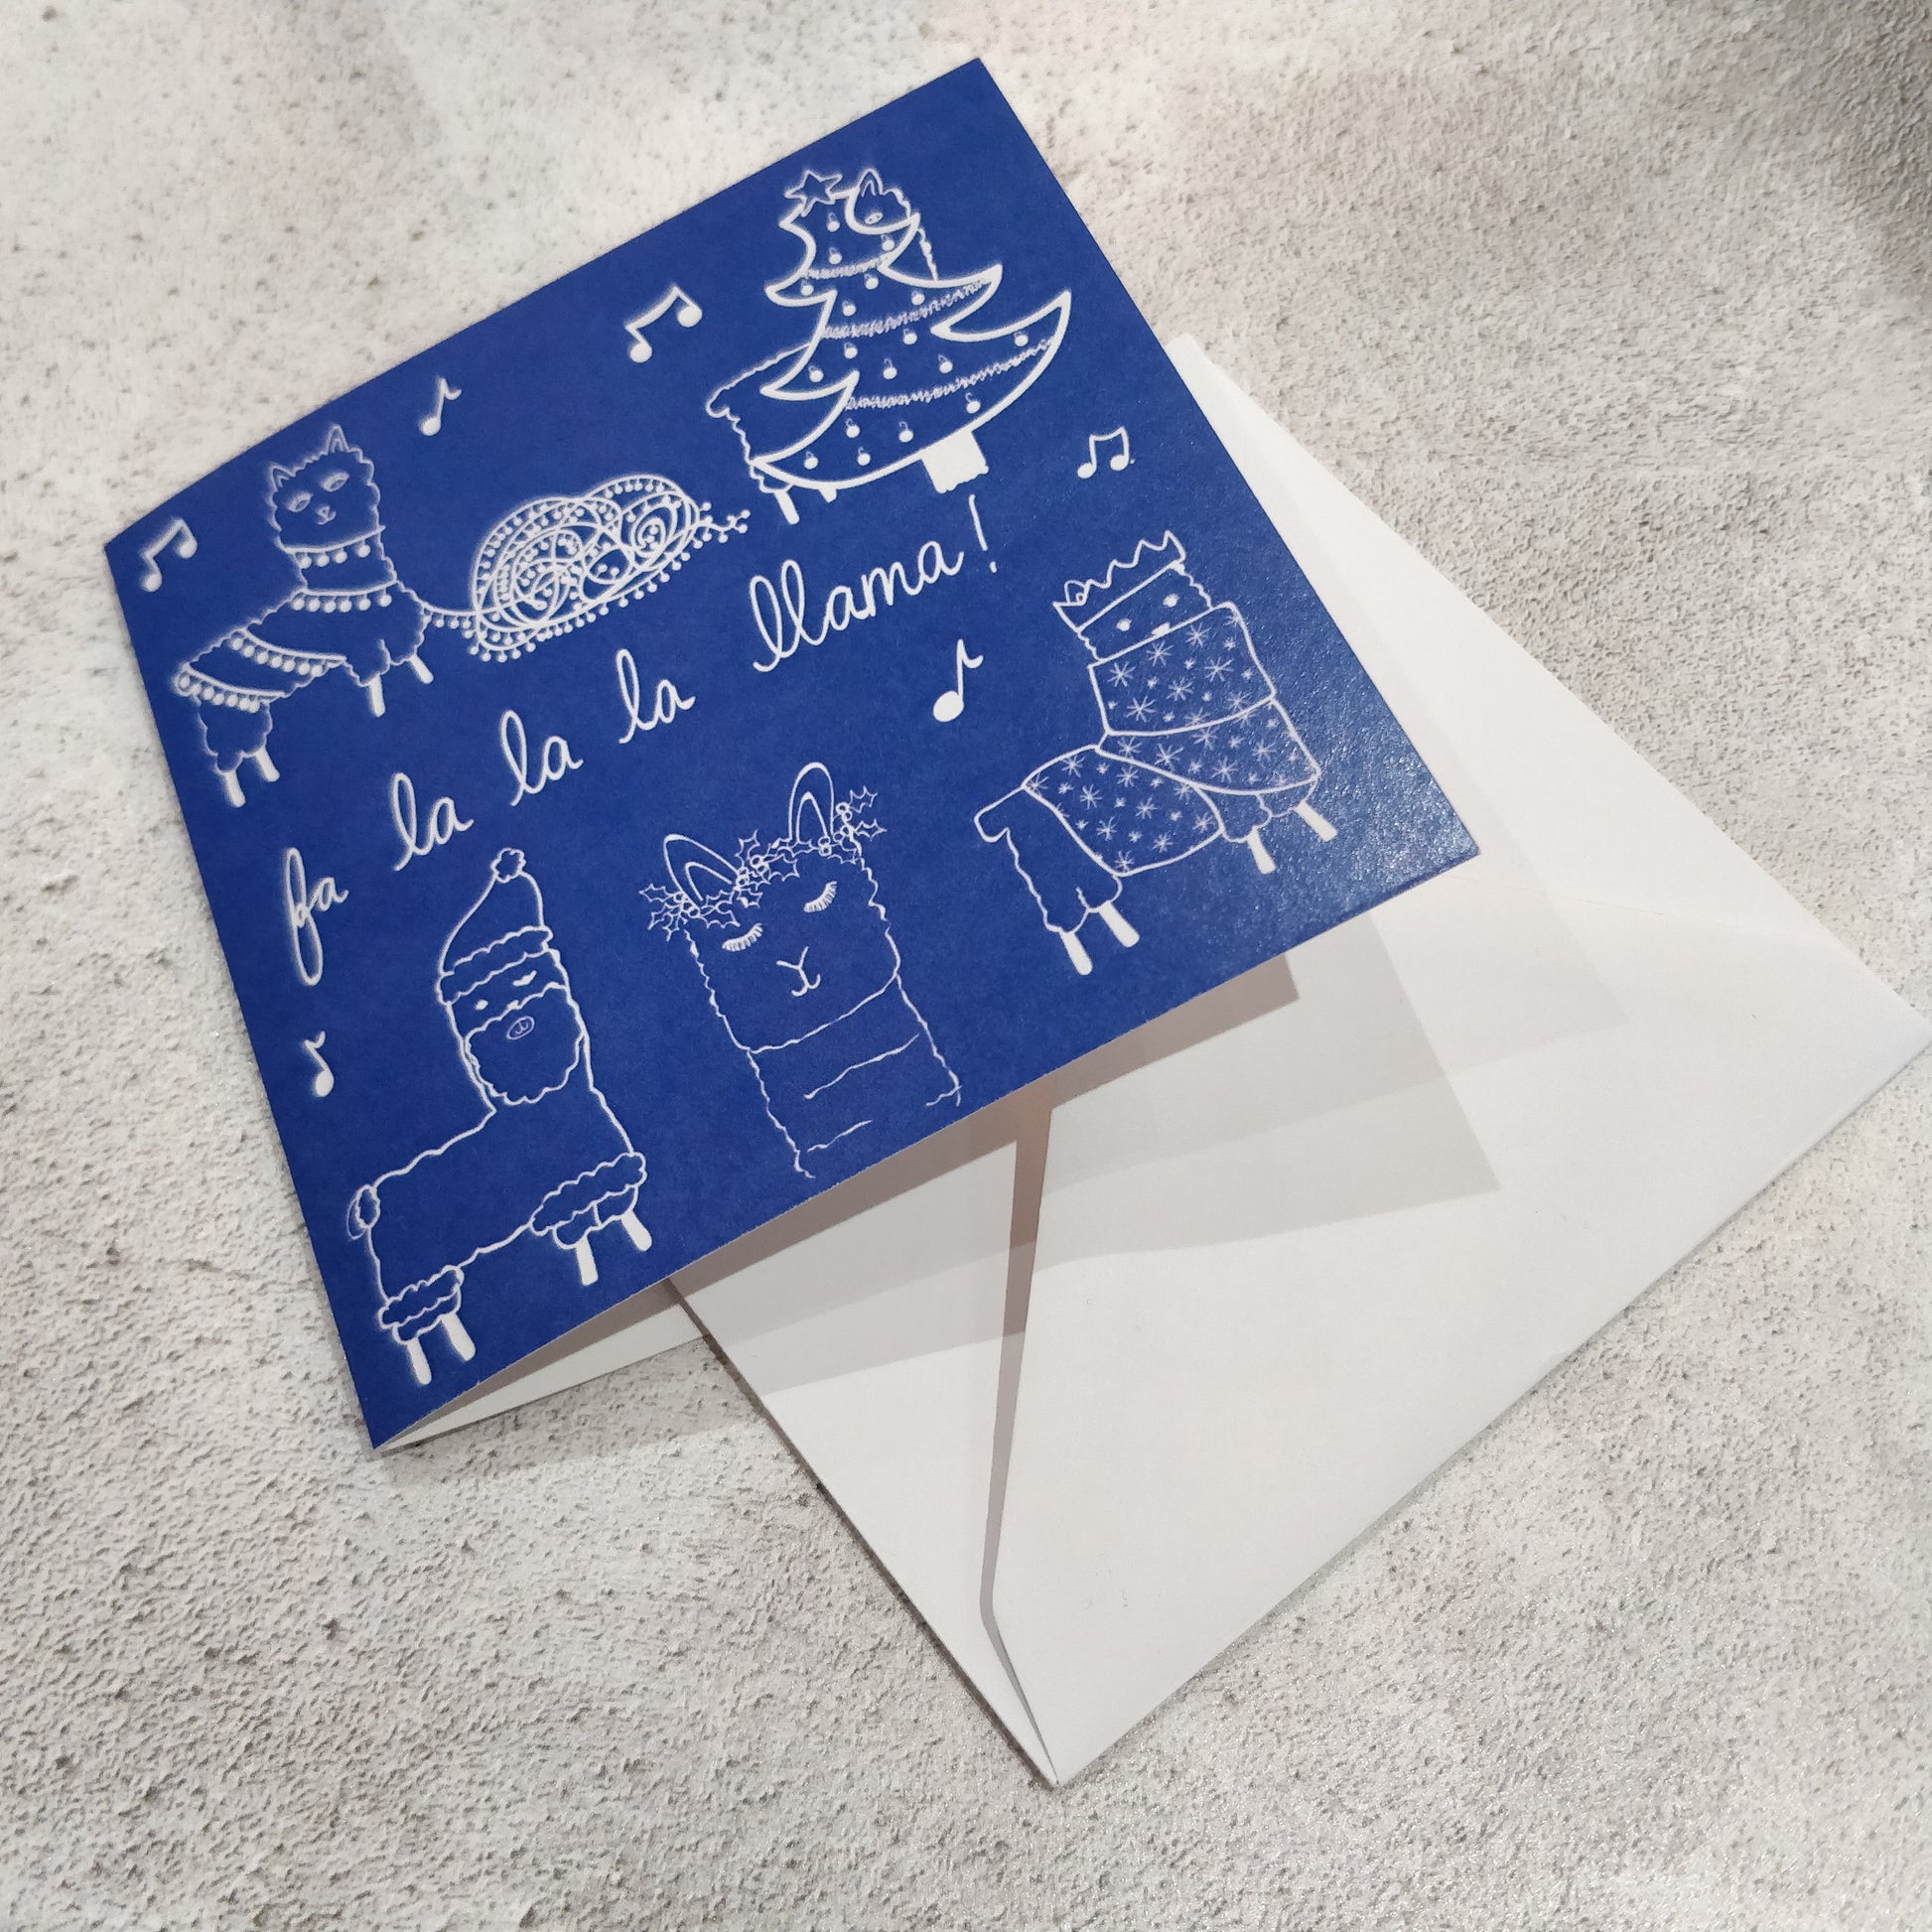 Three Illustrated Christmas Square Greeting Cards - fay-dixon-design